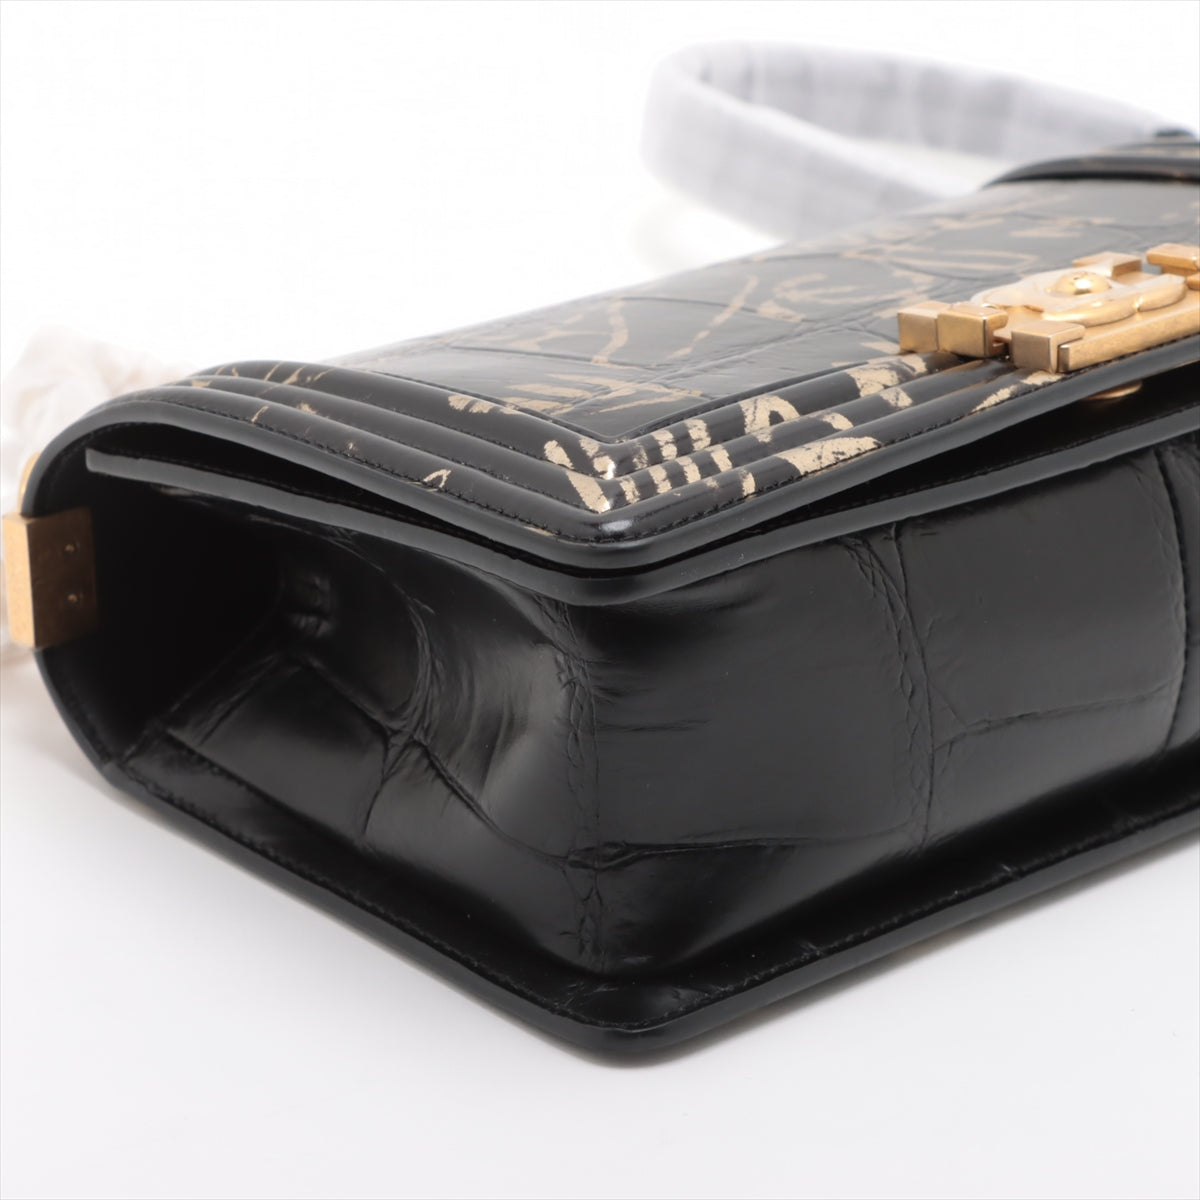 Chanel BOY CHANEL 25 Mock Croc Chain Shoulder Bag Black Gold Metal Fittings 28th